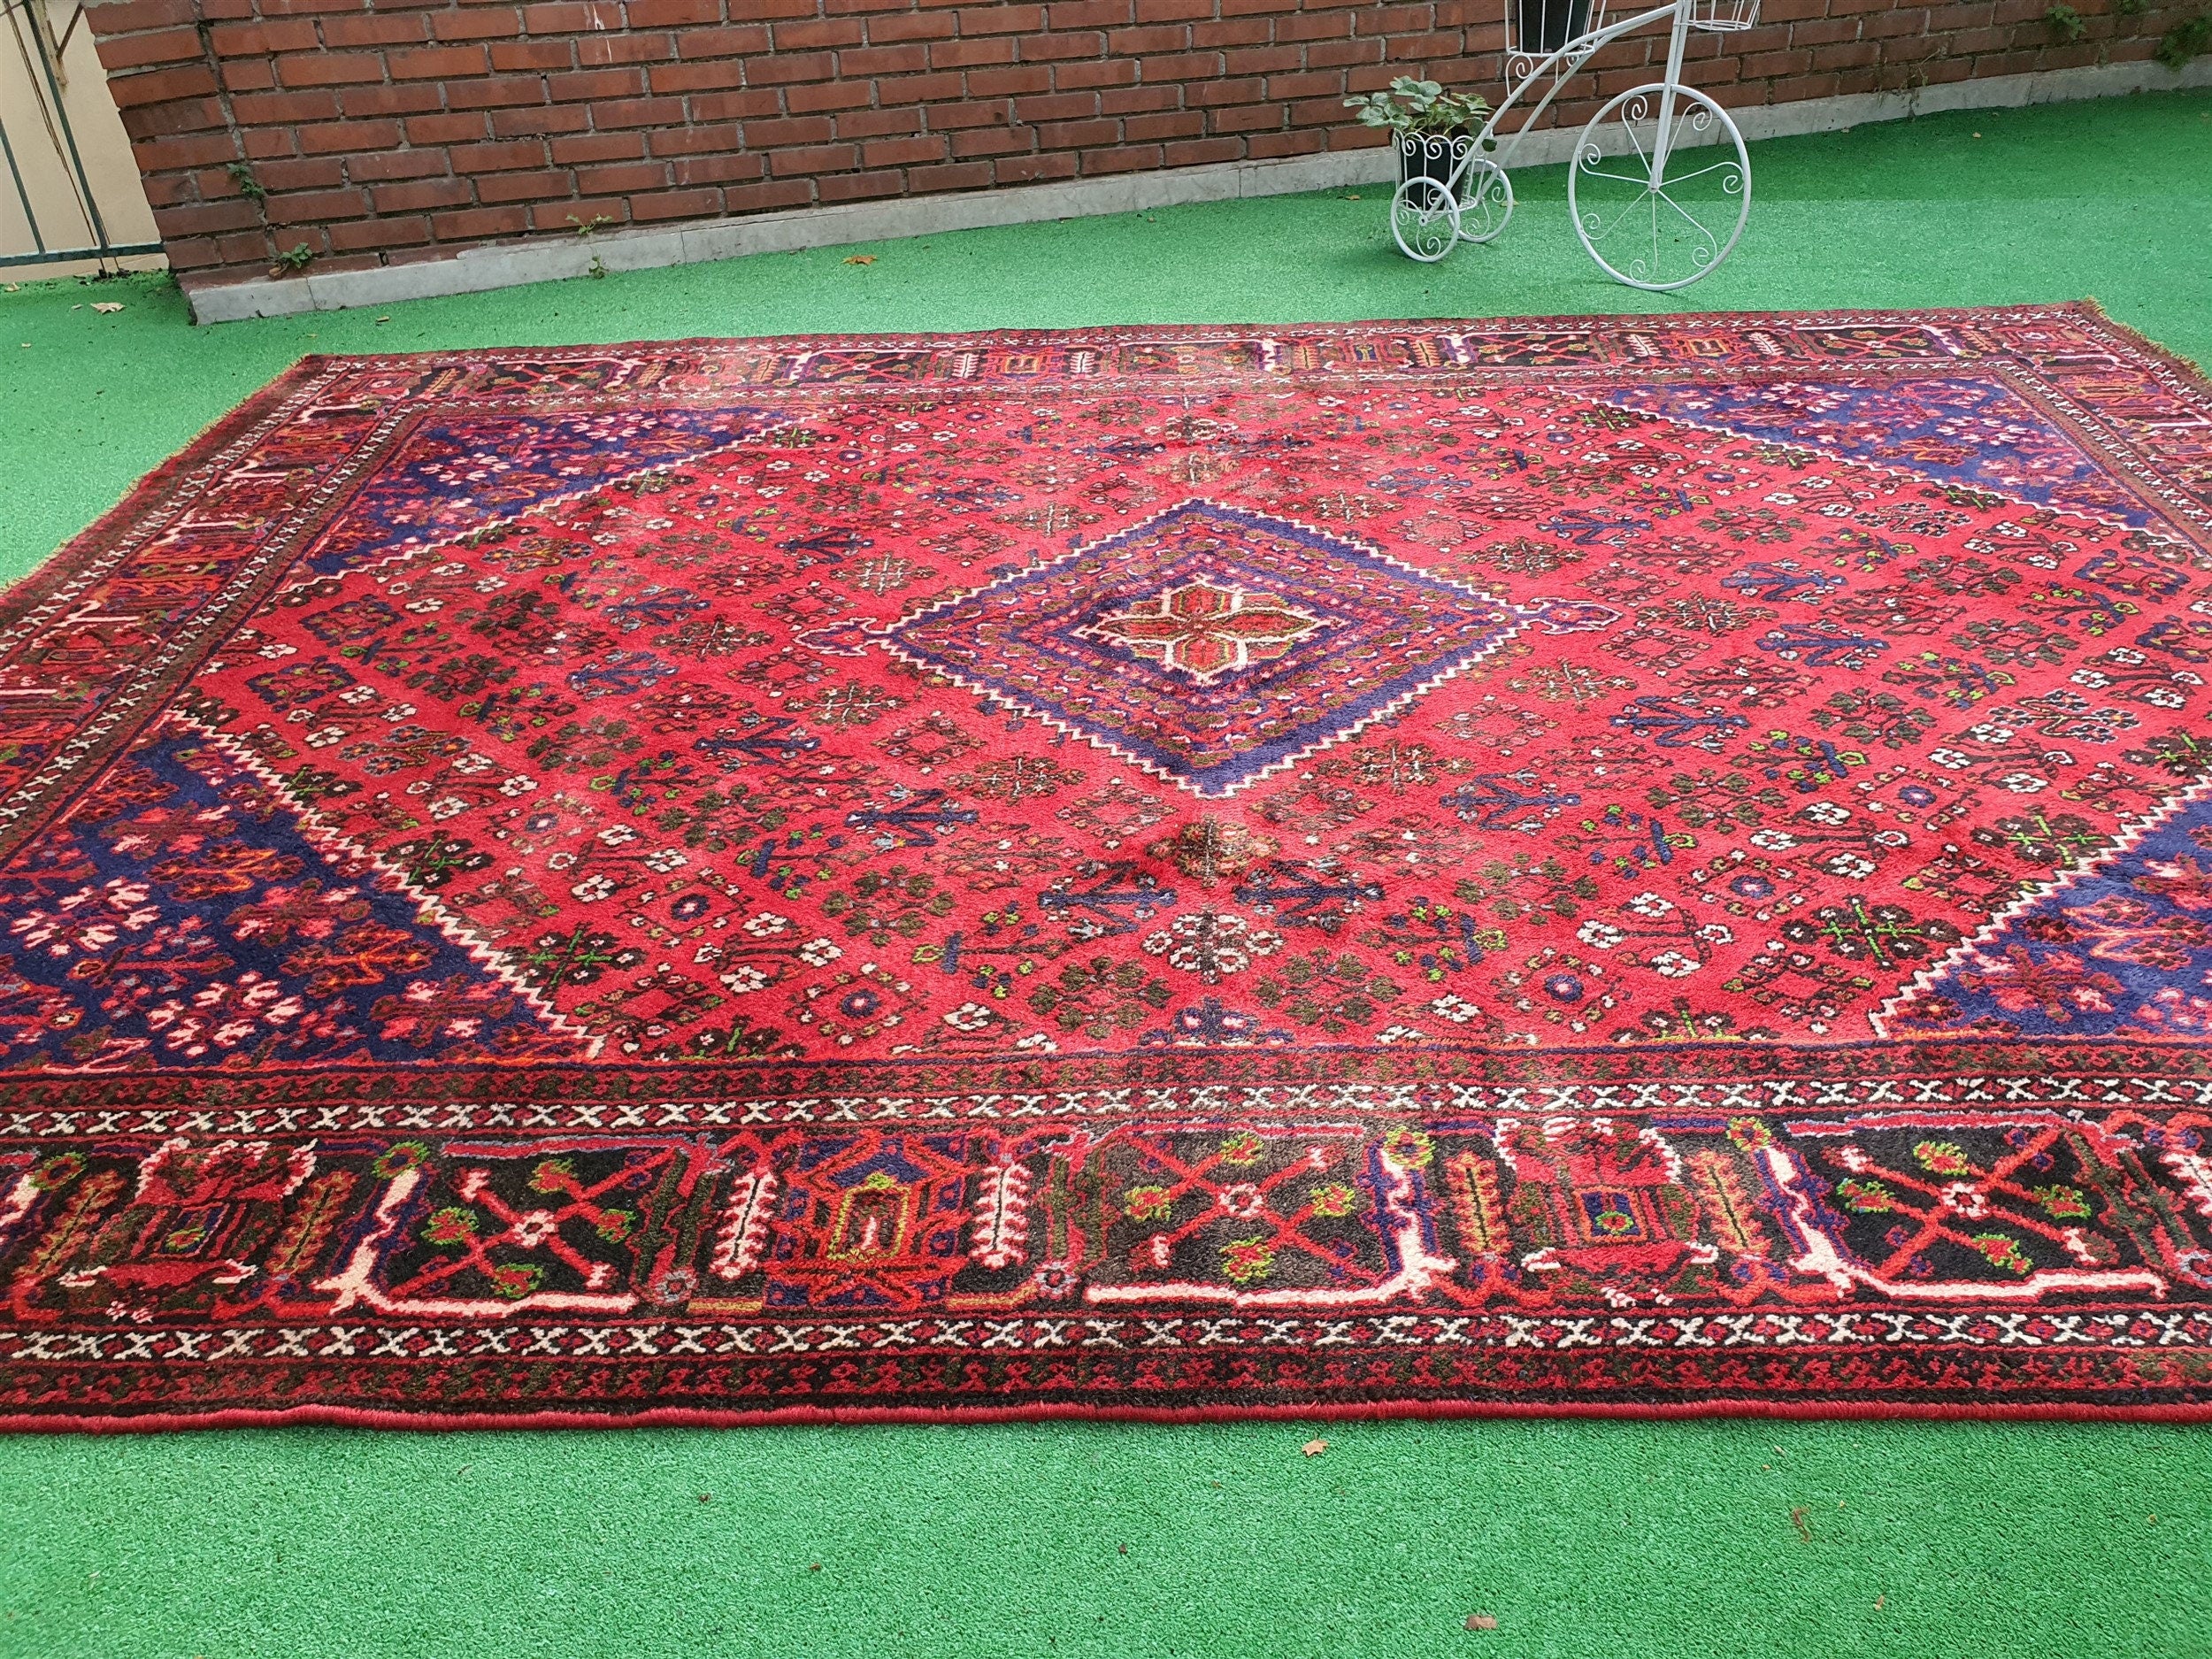 Vintage Persian Rug 10 x 8 ft Red Blue Turkish  Floral Medallion Large Floor Rug., Handmade Boho Rustic Natural Wool Living Dining Room Rug